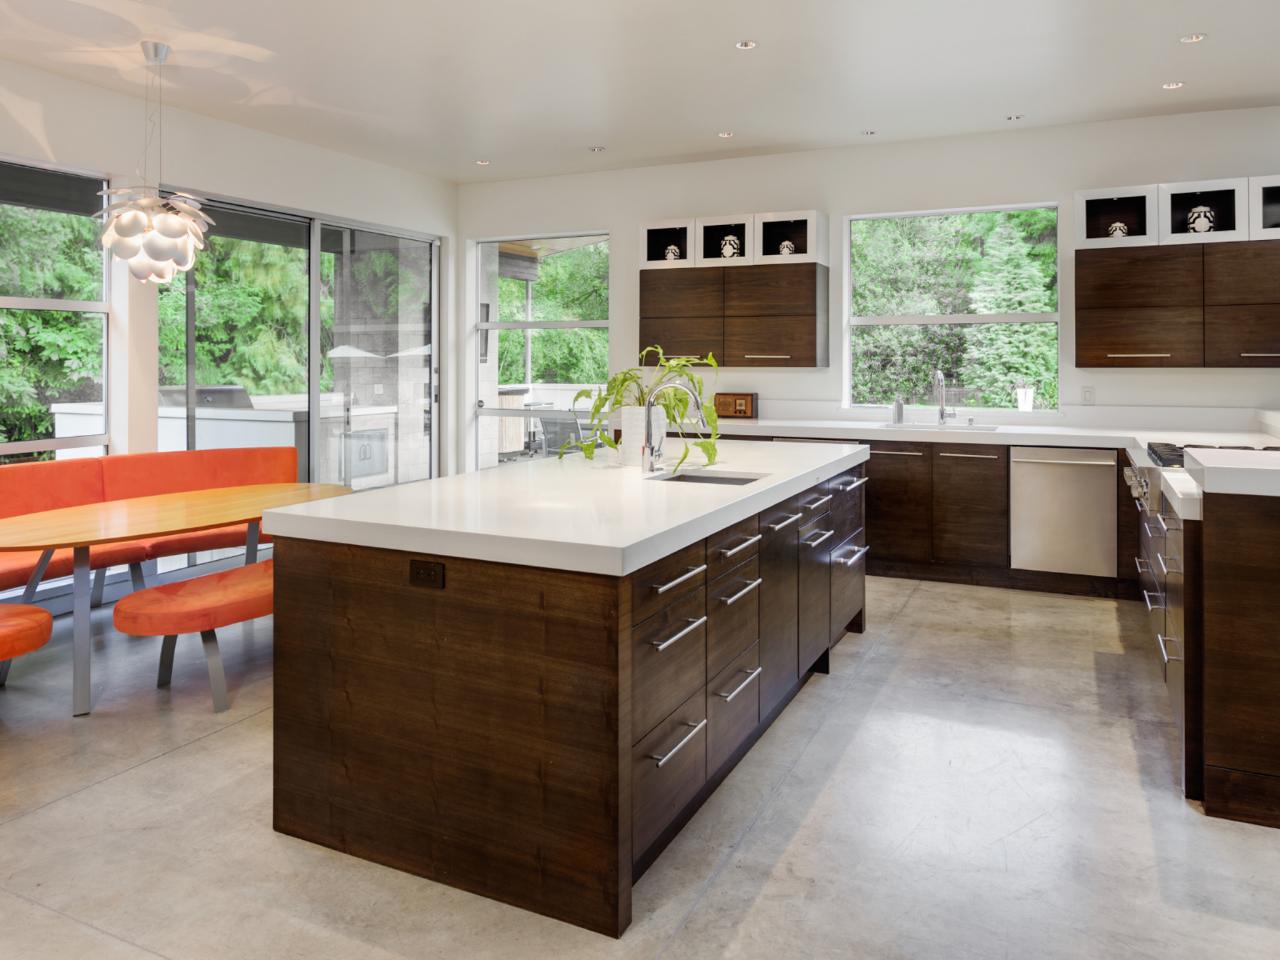 Best Kitchen Flooring Options Diy inside Flooring Options For Kitchen